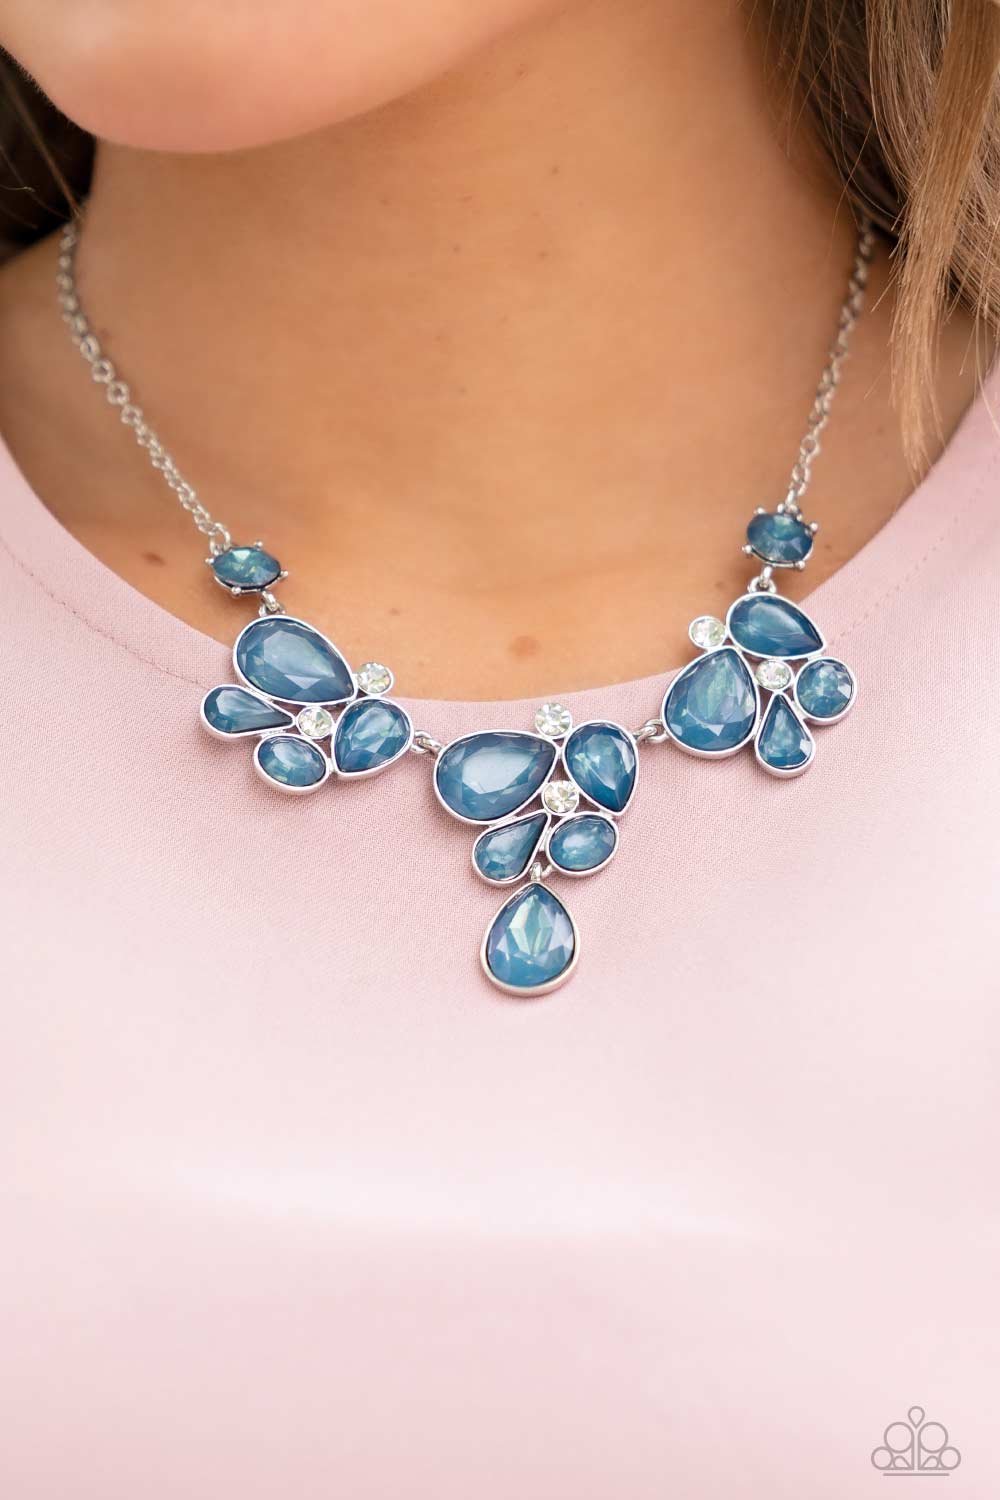 Paparazzi “Everglade Escape” Blue Necklace Earring Set